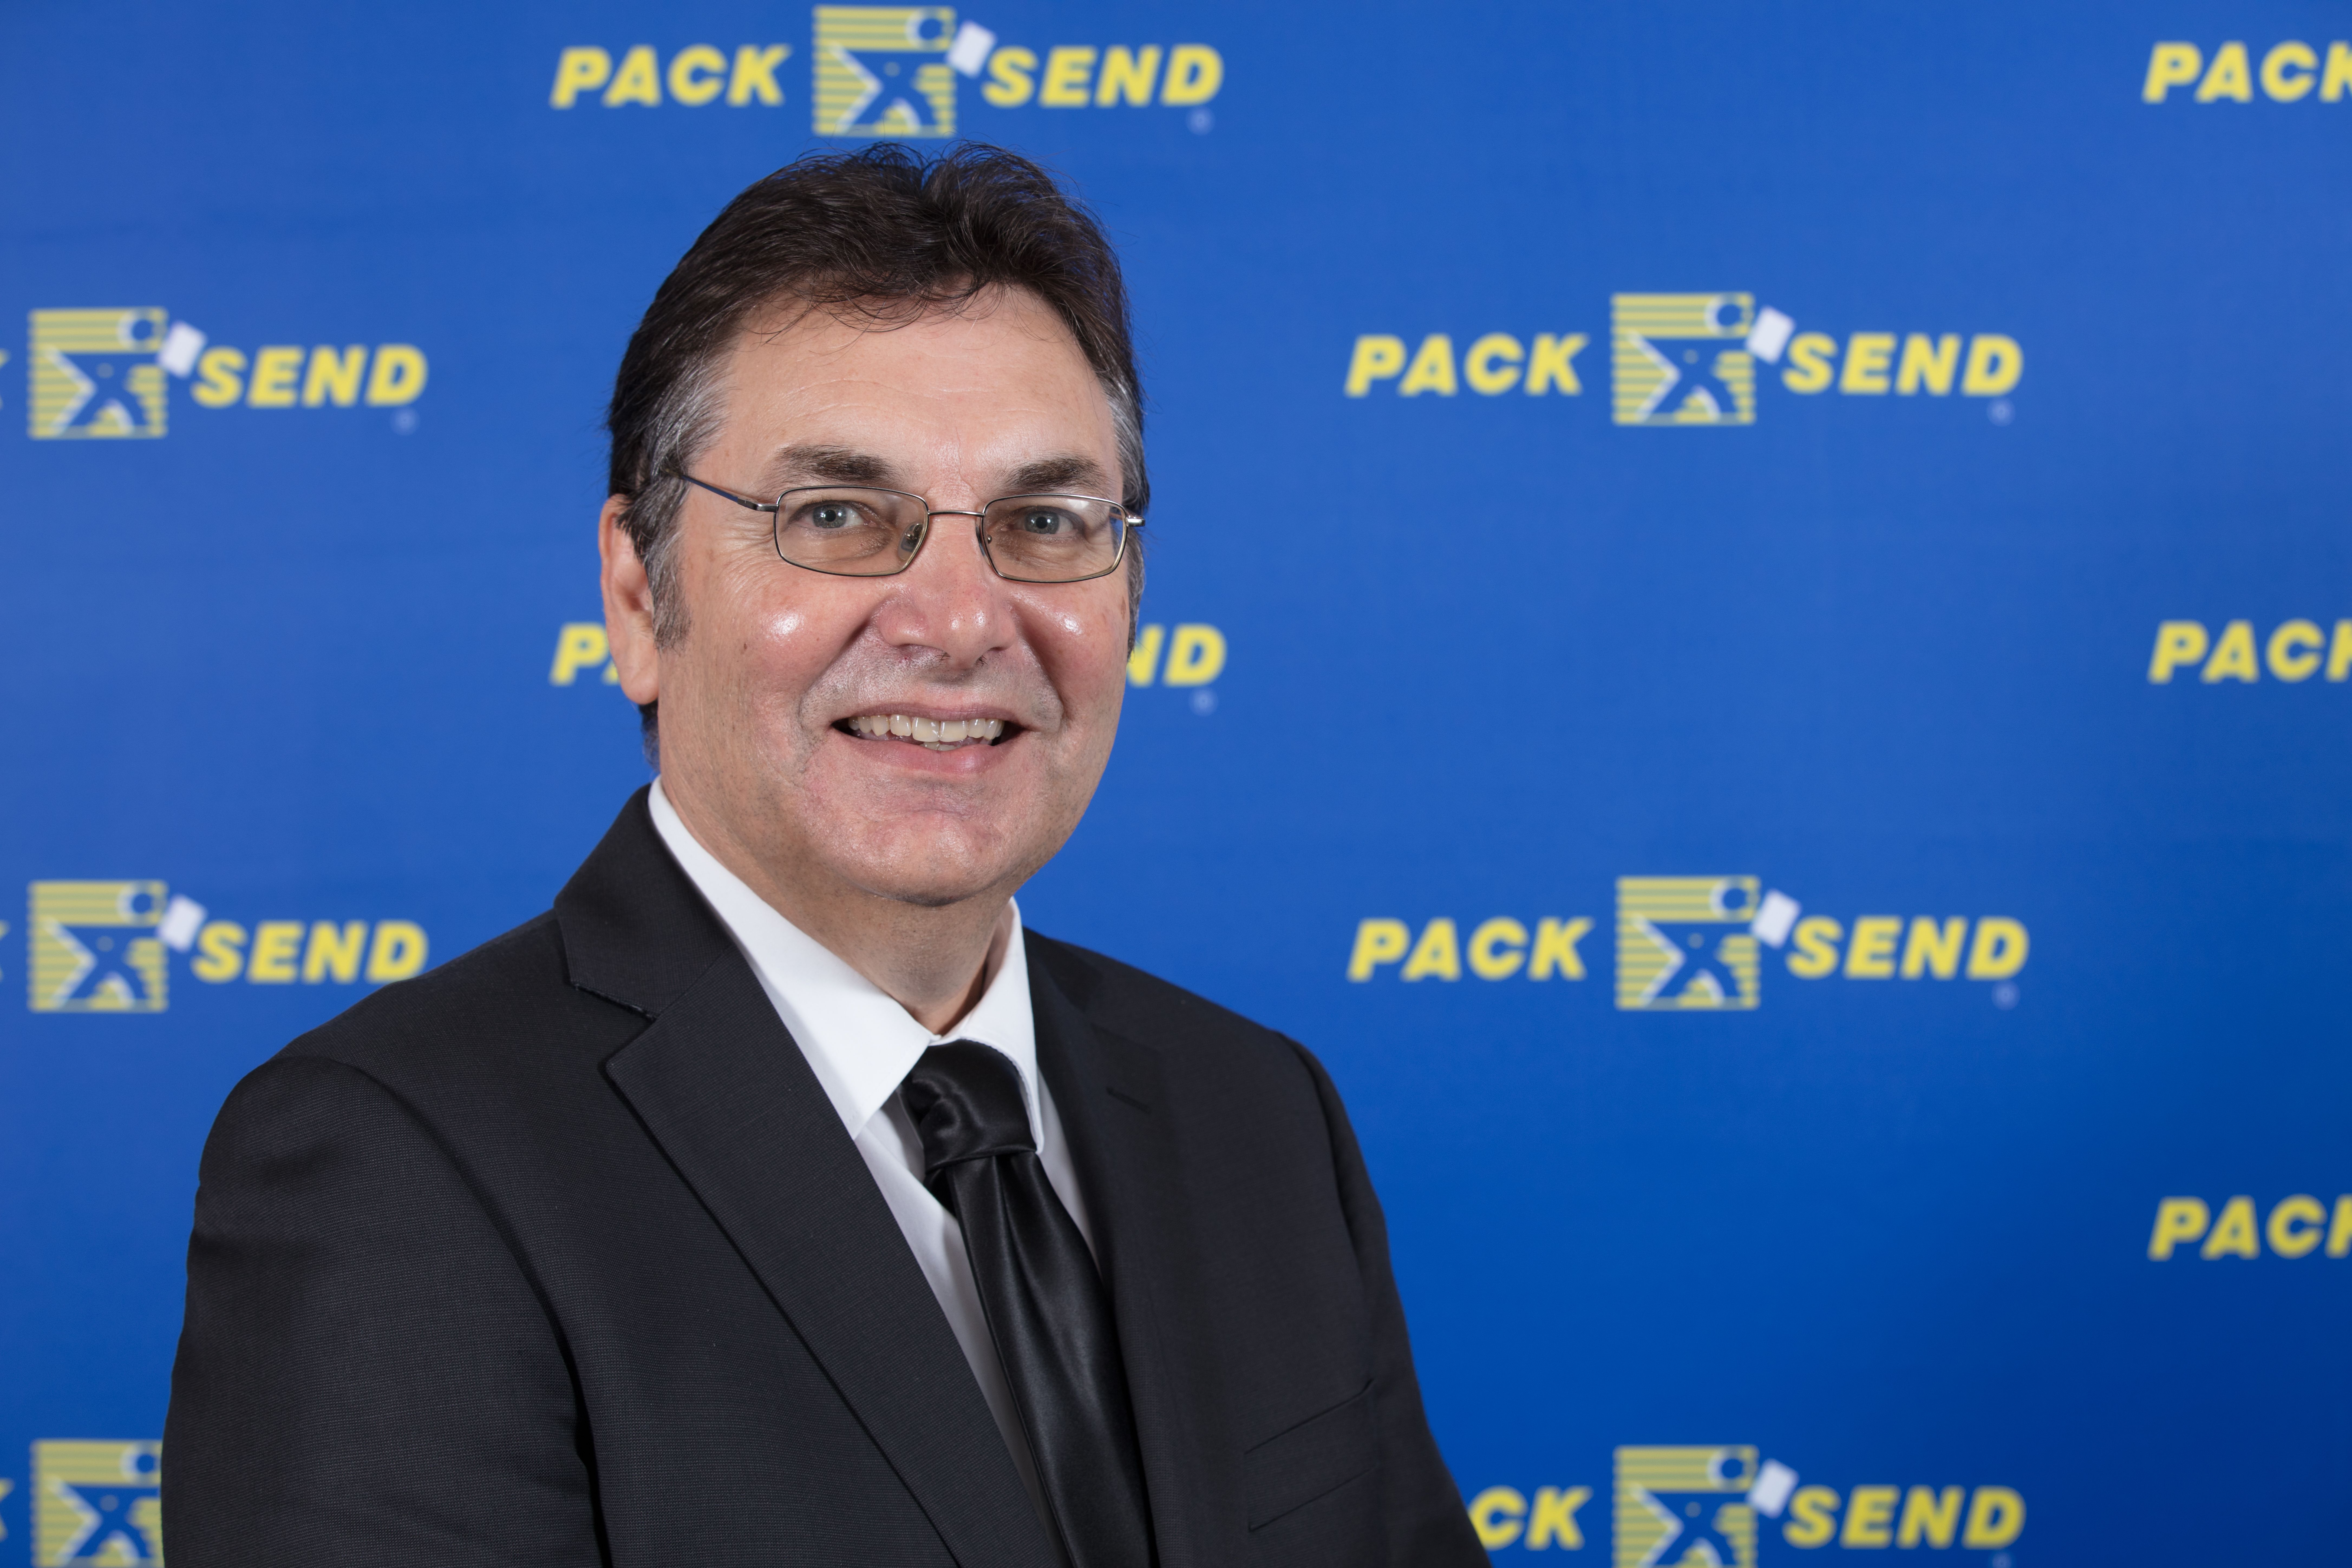 Michael Paul, Pack & Send founder